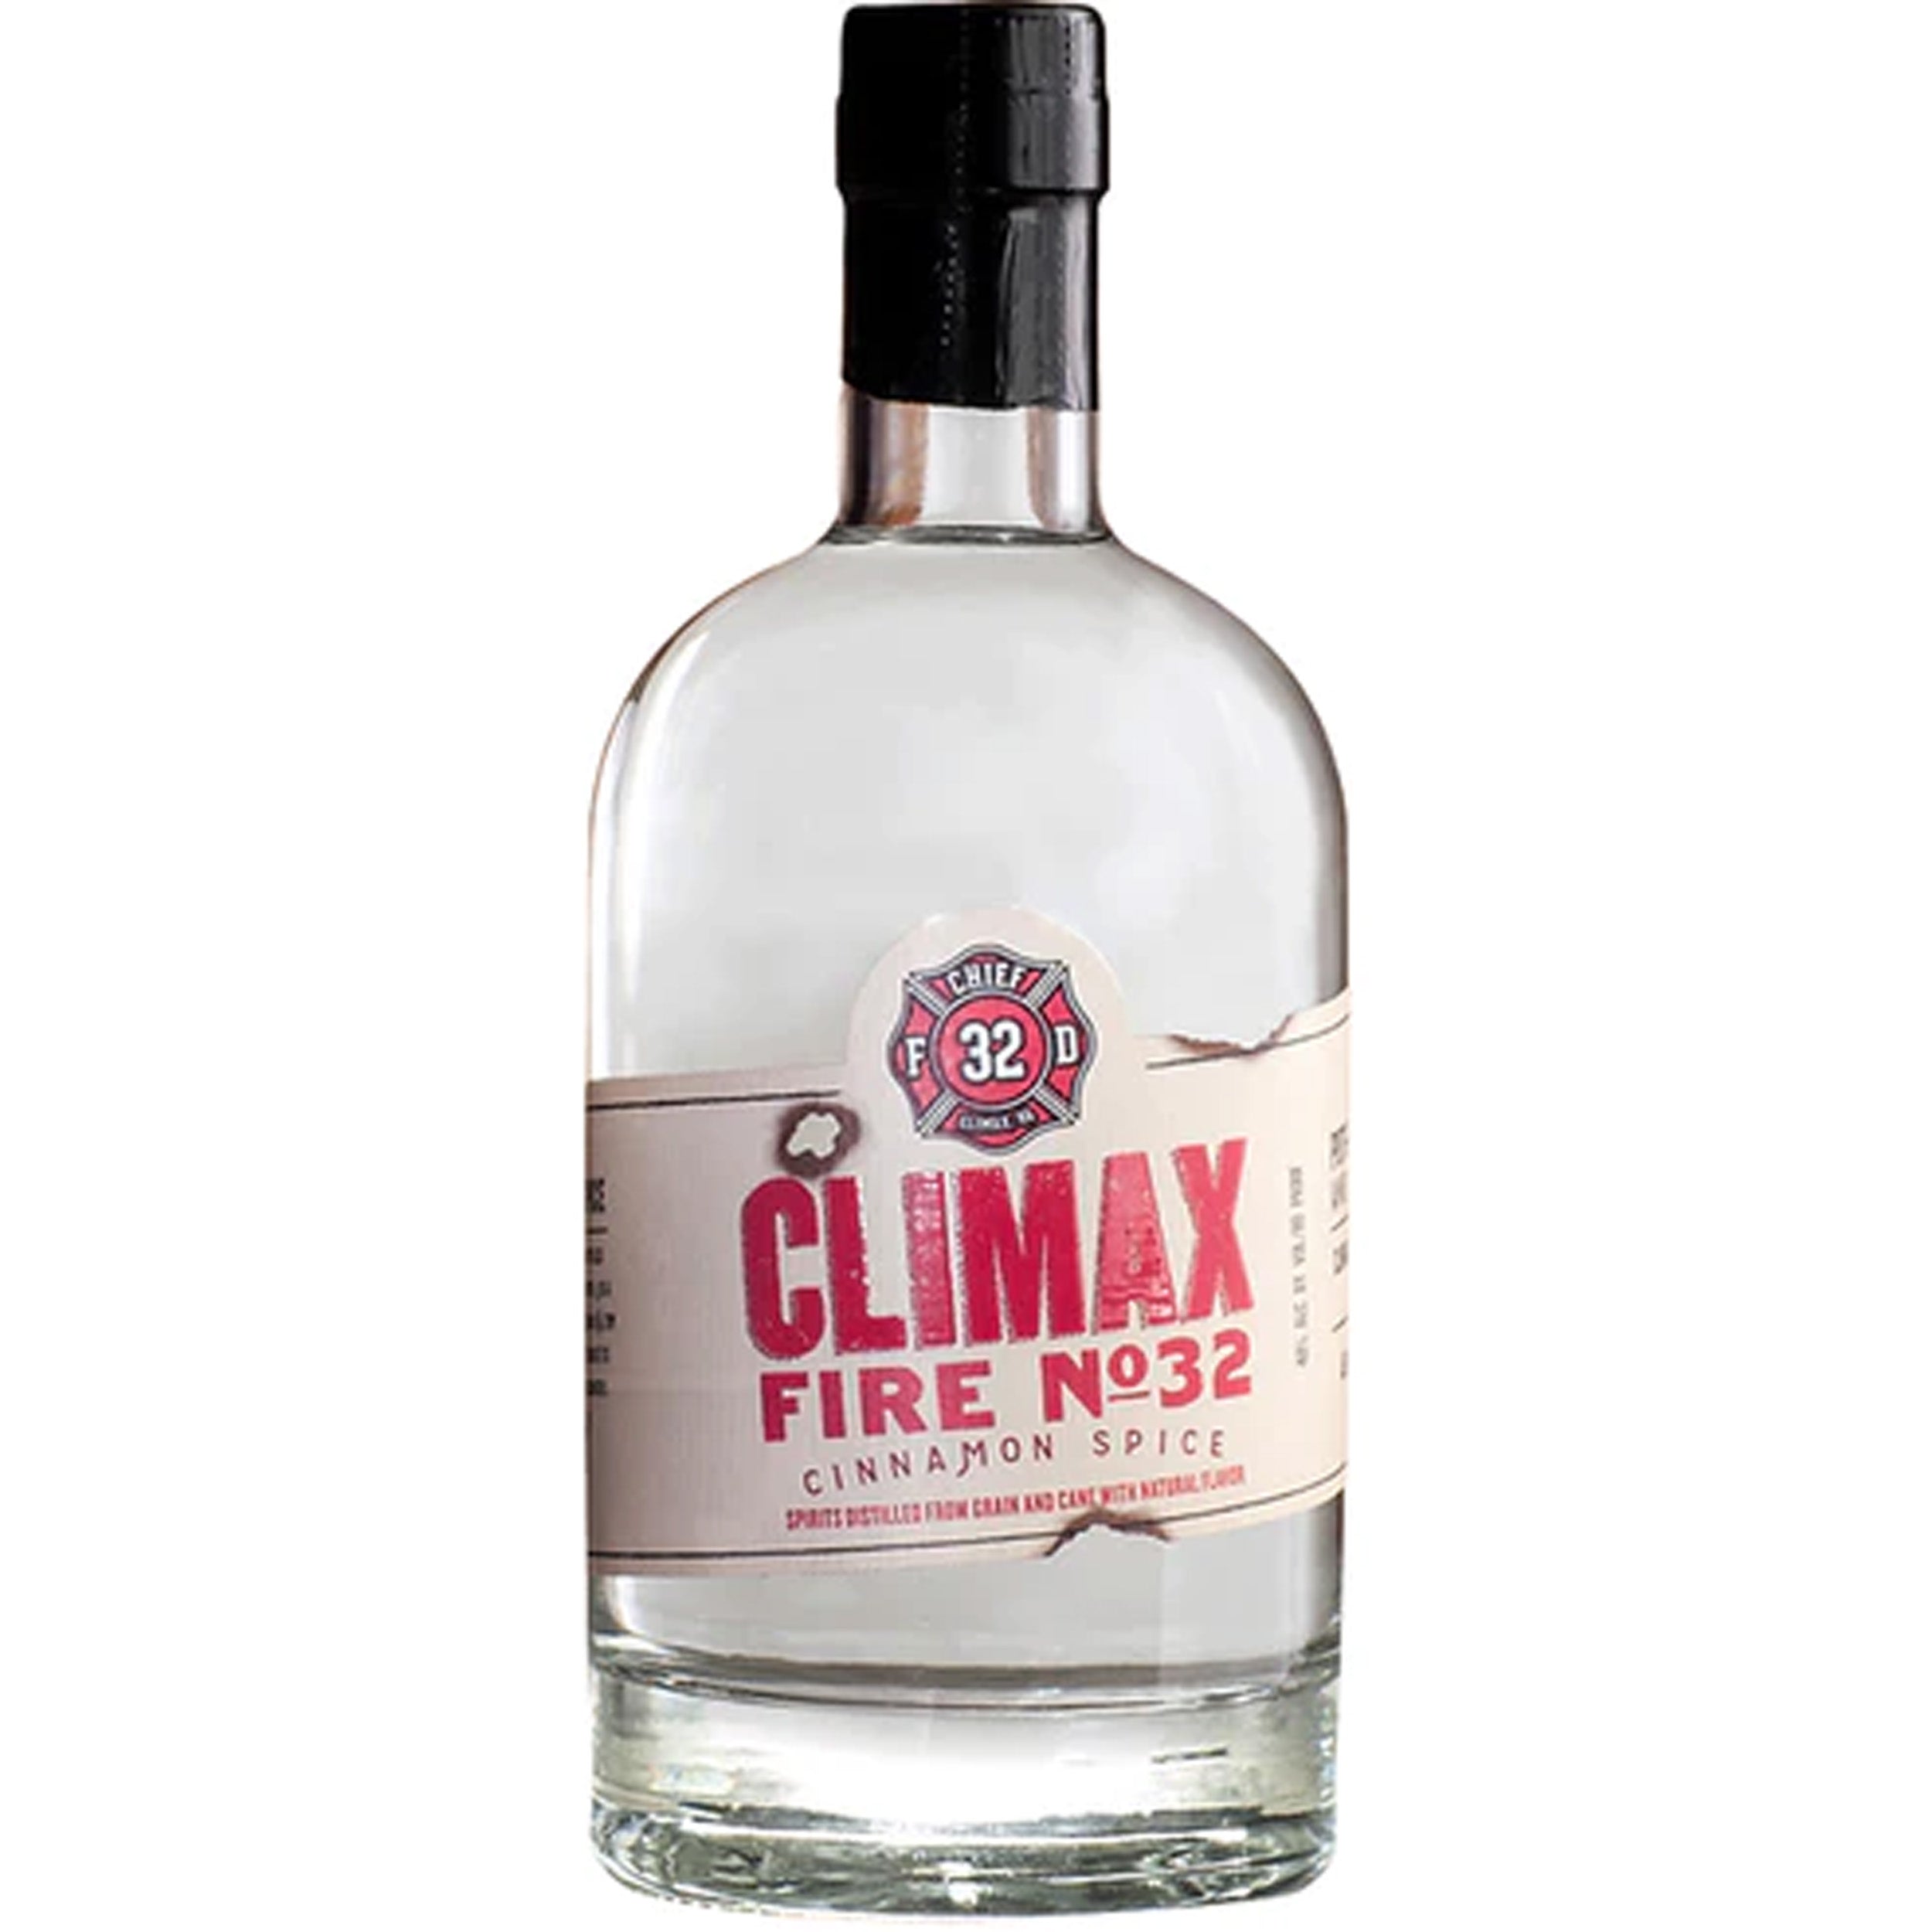 Climax Spirits Fire Moonshine No. 32 – Chips Spice Cinnamon Liquor